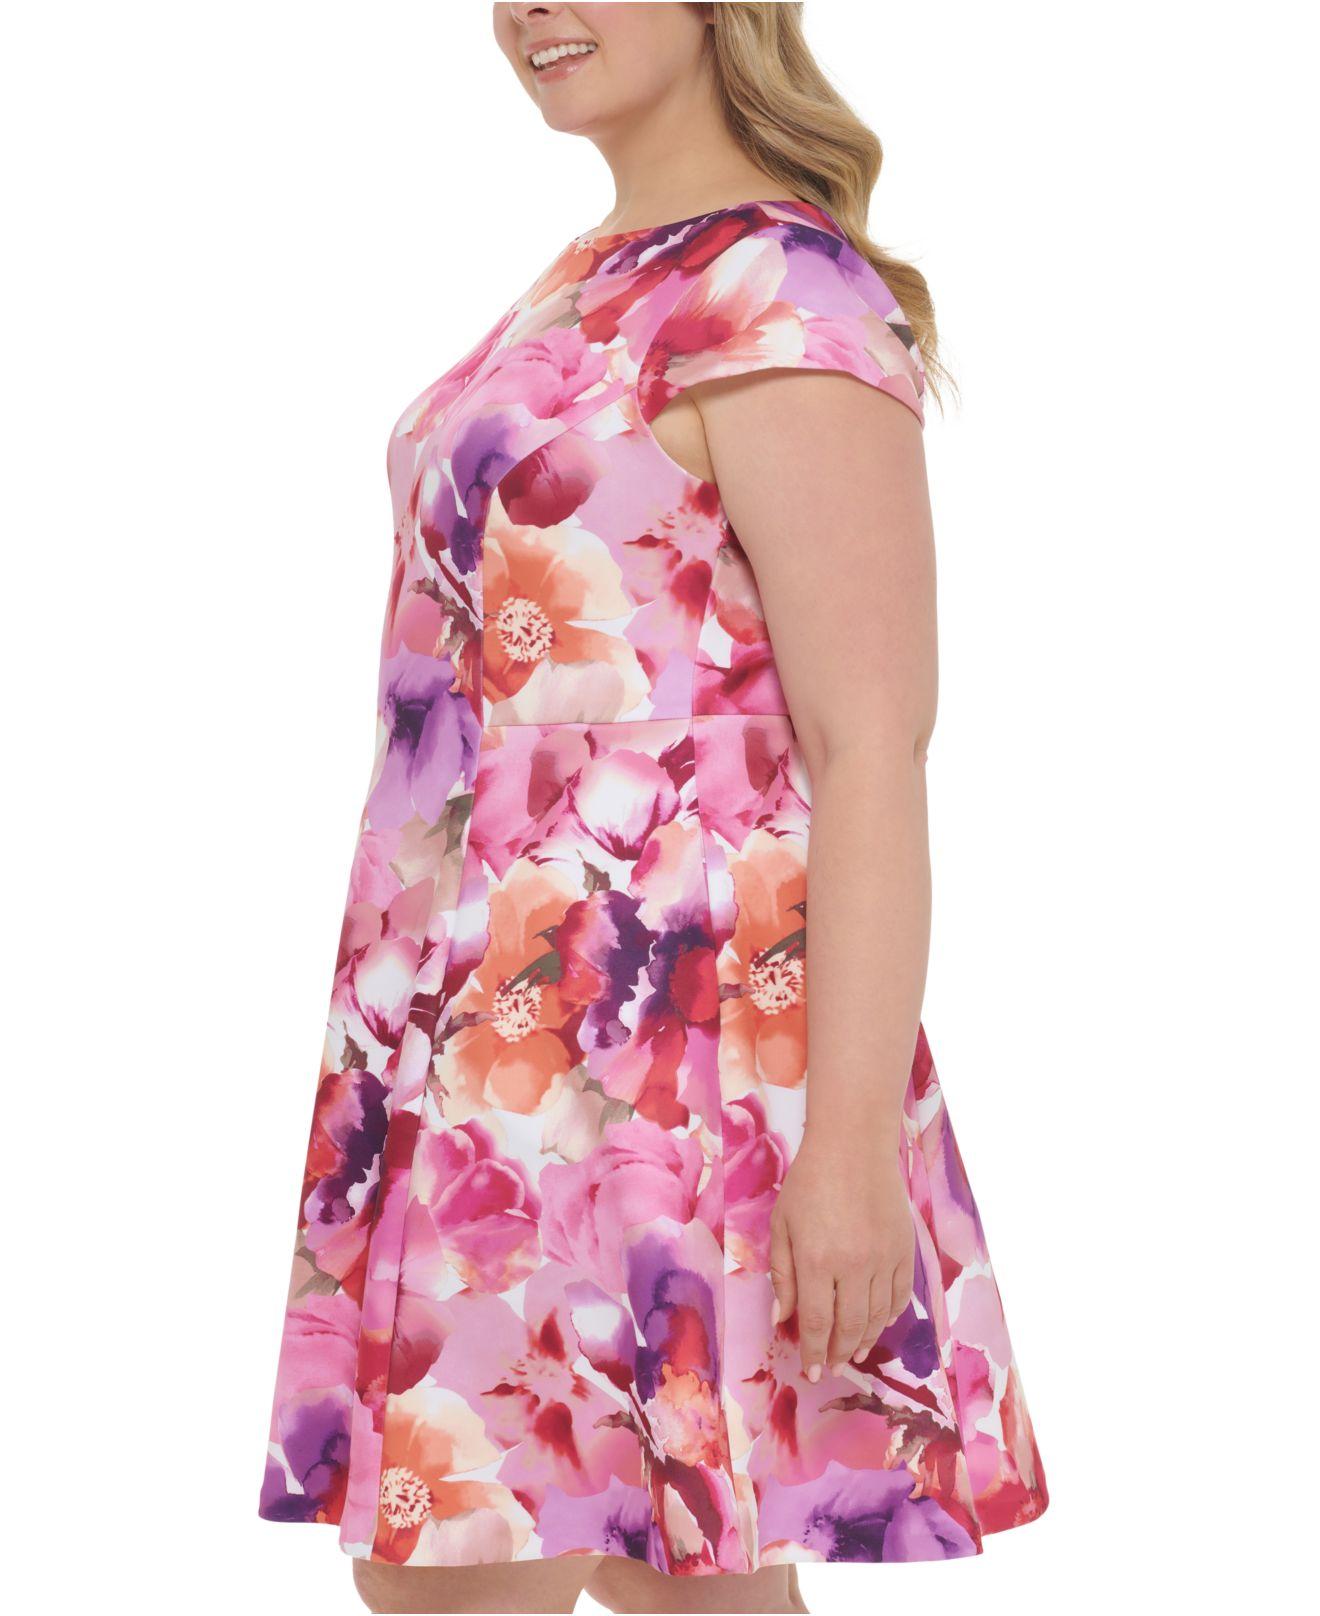 gateway gyldige Wetland Jessica Howard Plus Size Floral-print Cap-sleeve Fit & Flare Dress in Pink  | Lyst